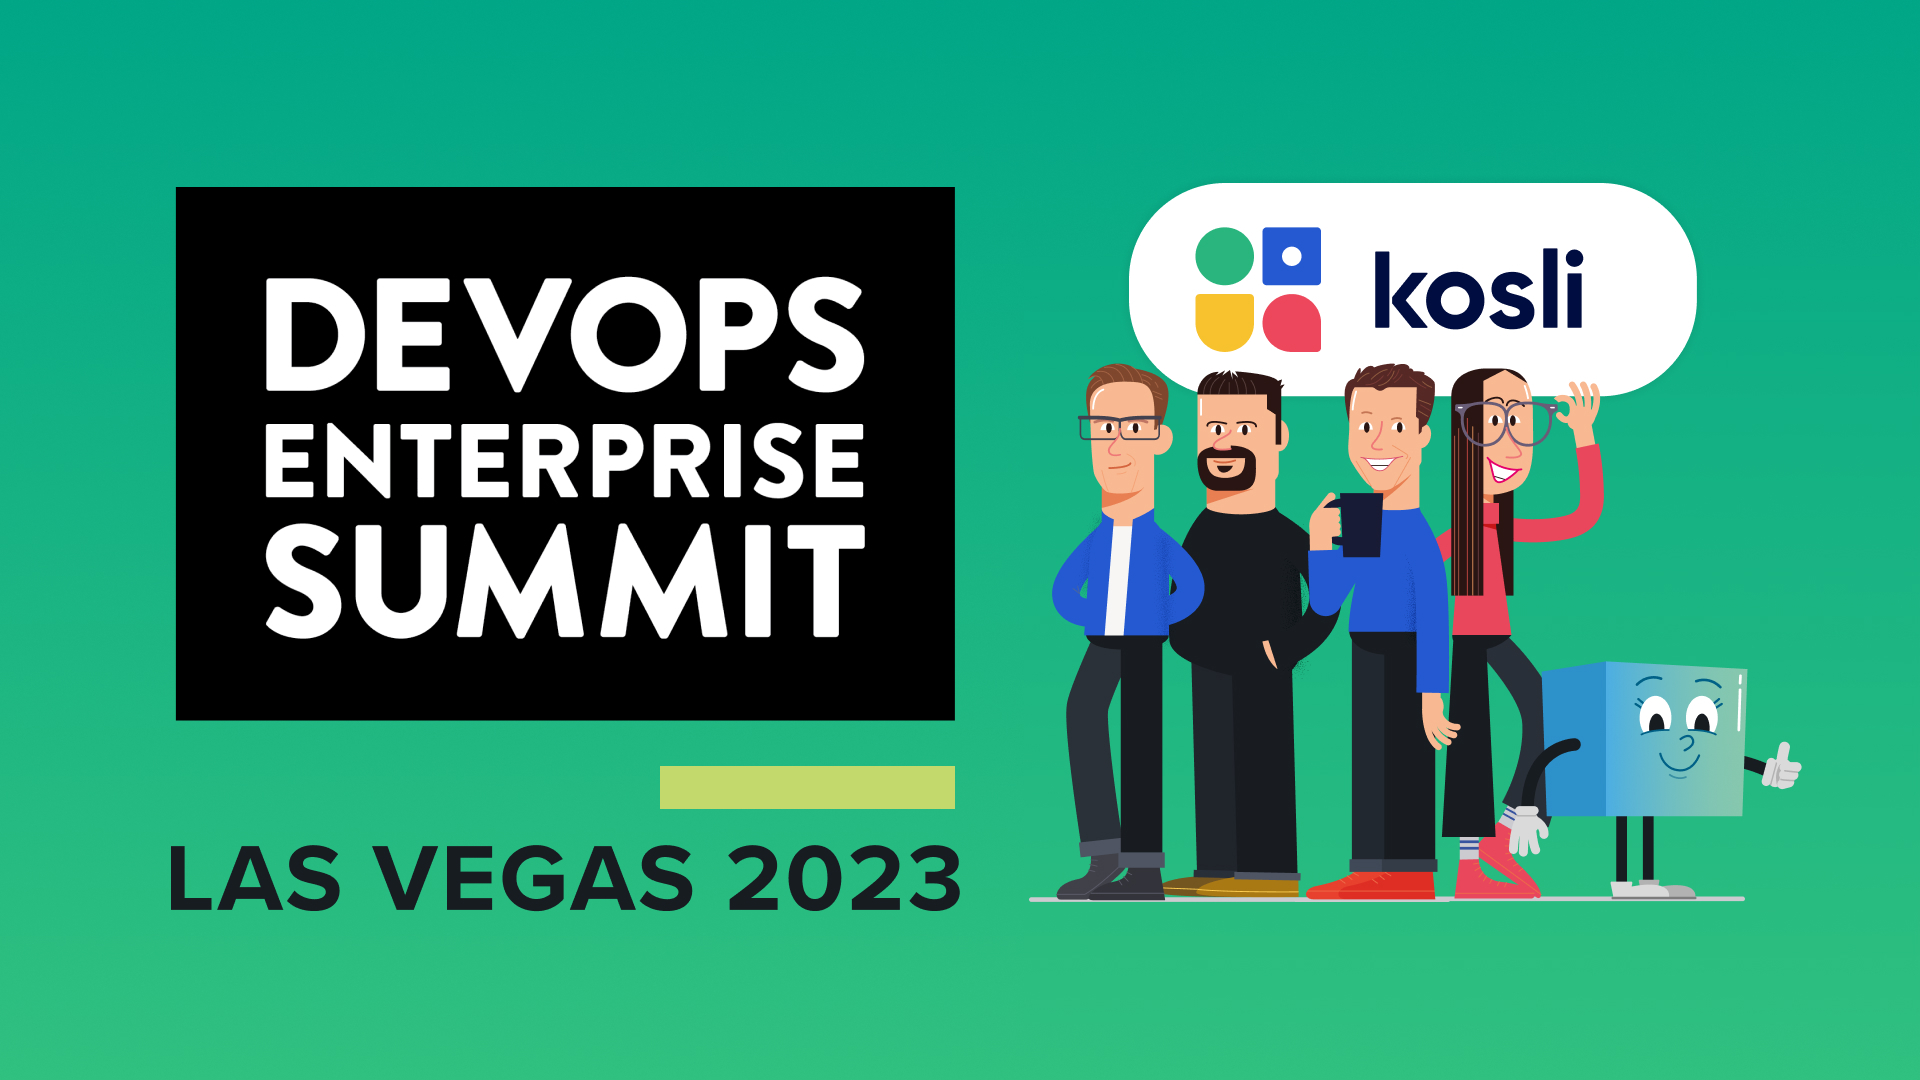 images/events/kosli-devops-enterprise-summit-vegas-2023-vegas.jpg